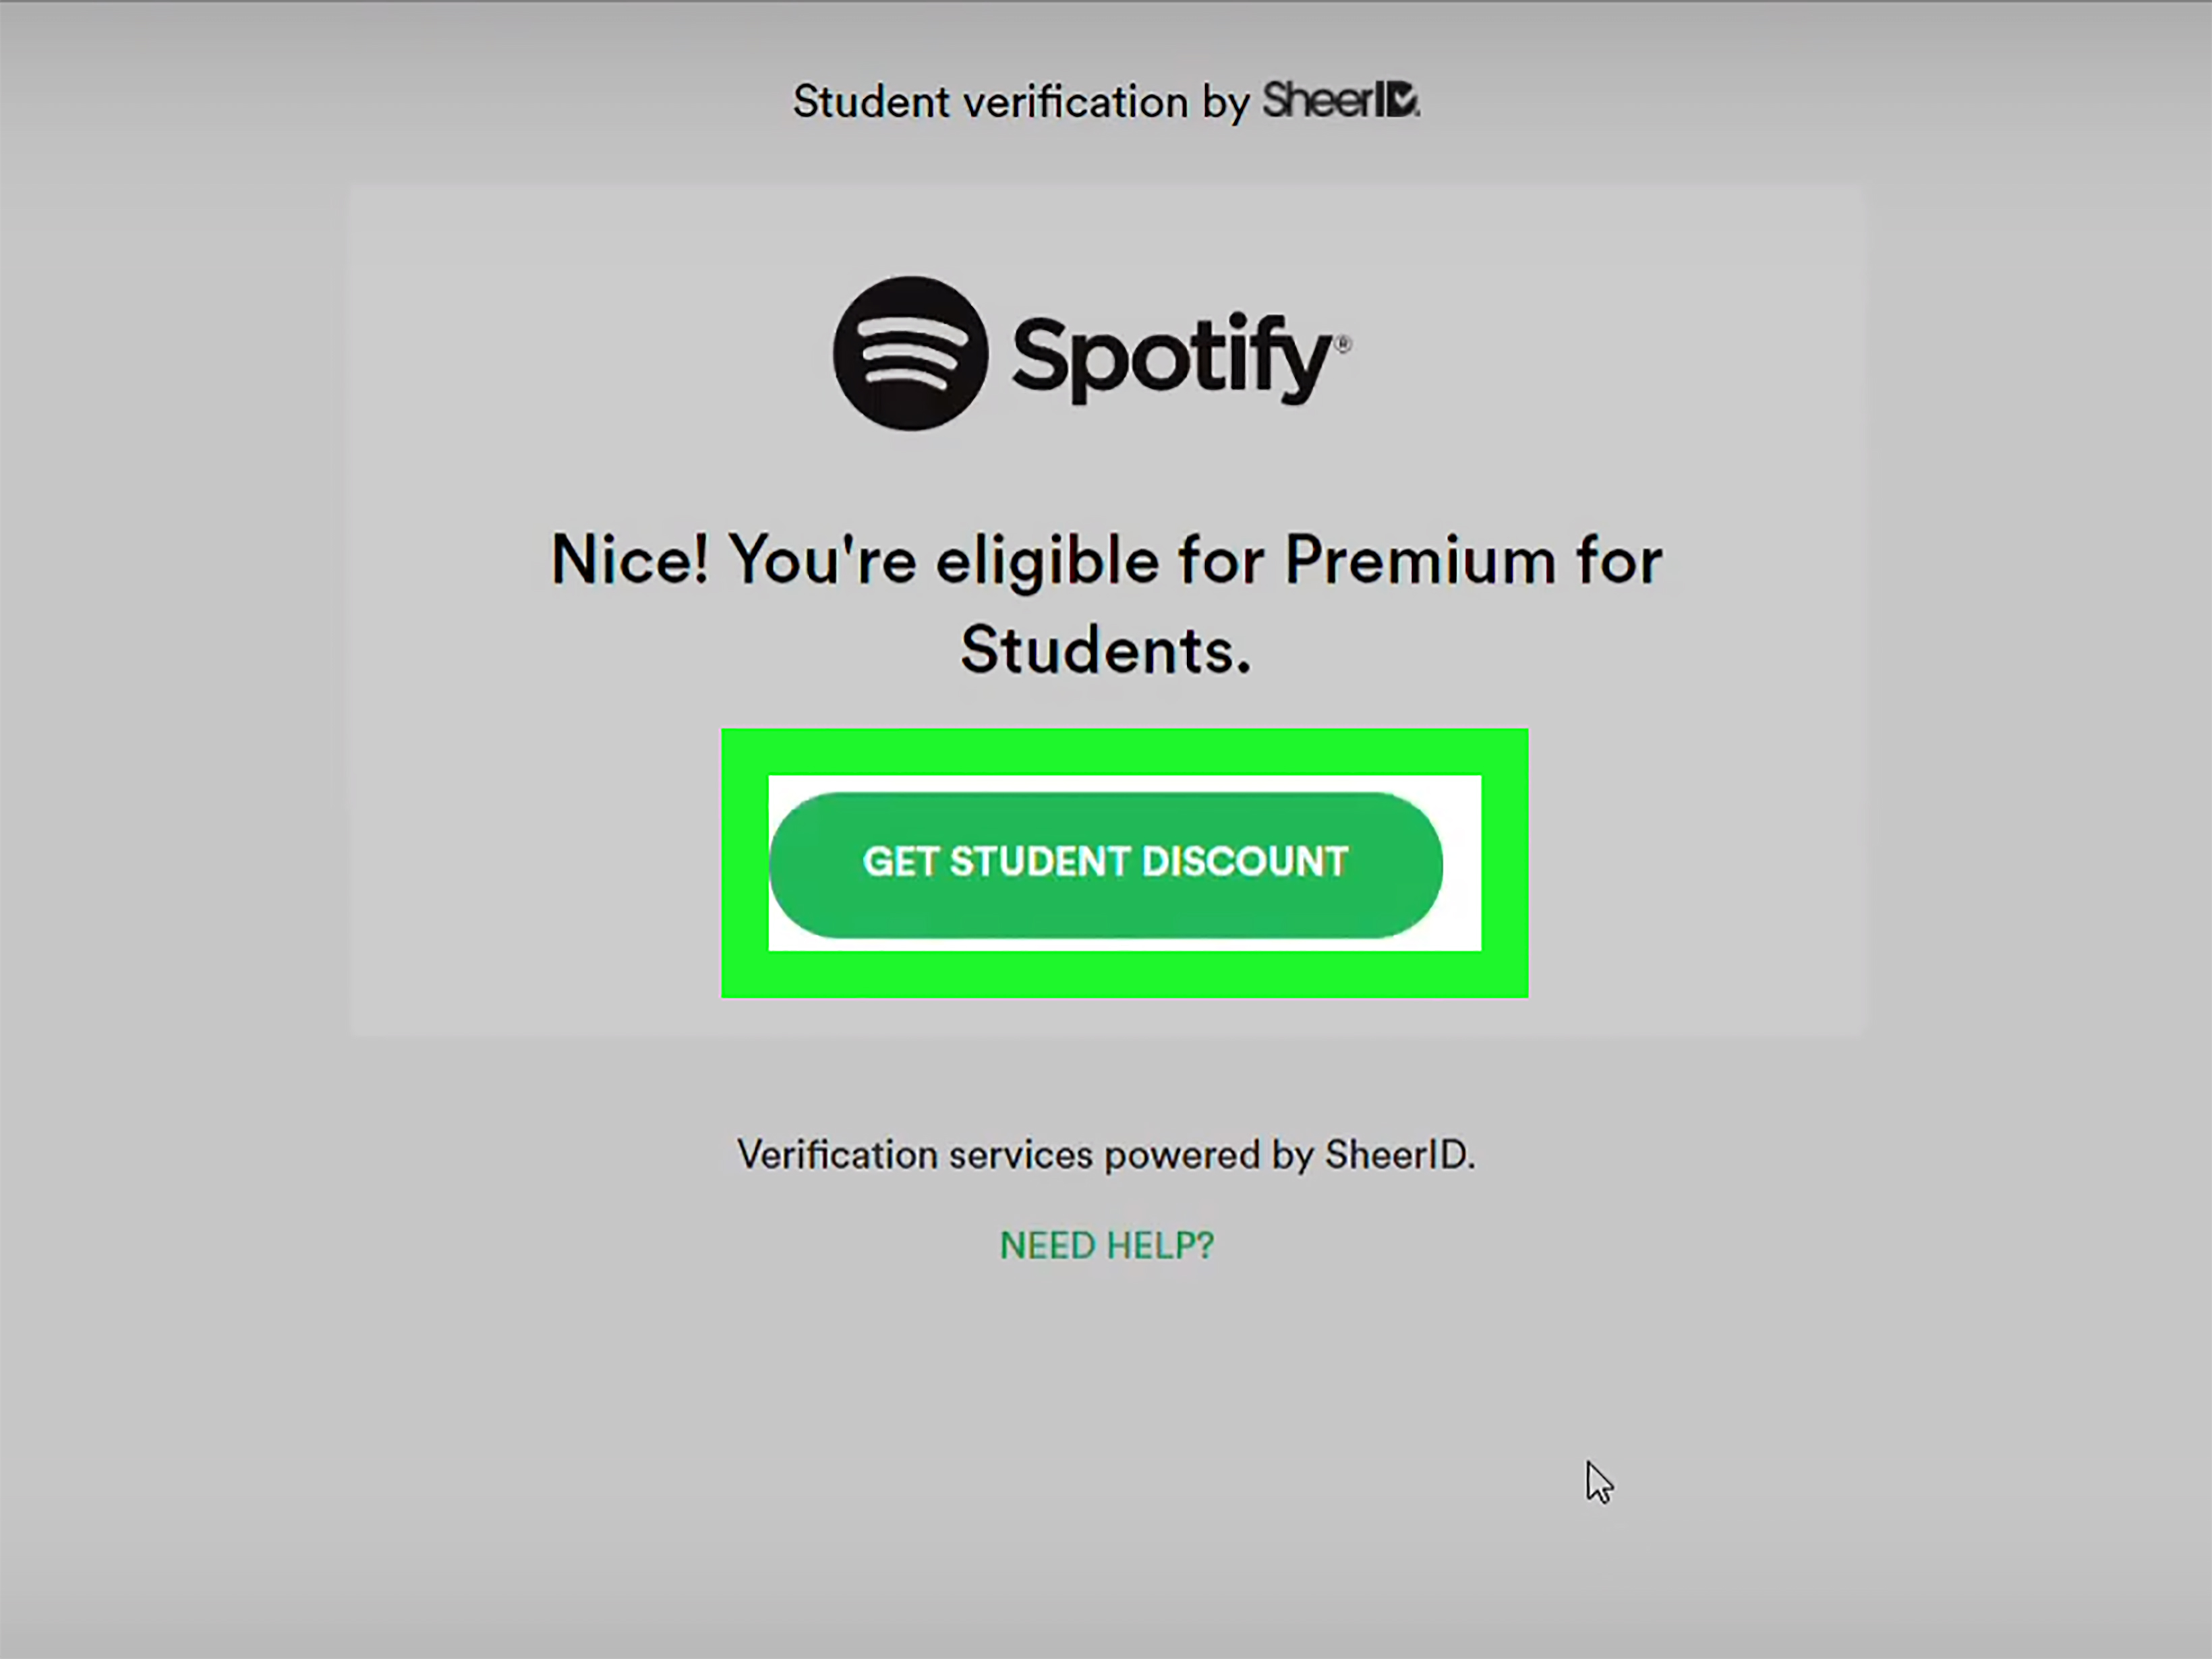 One month free spotify premium